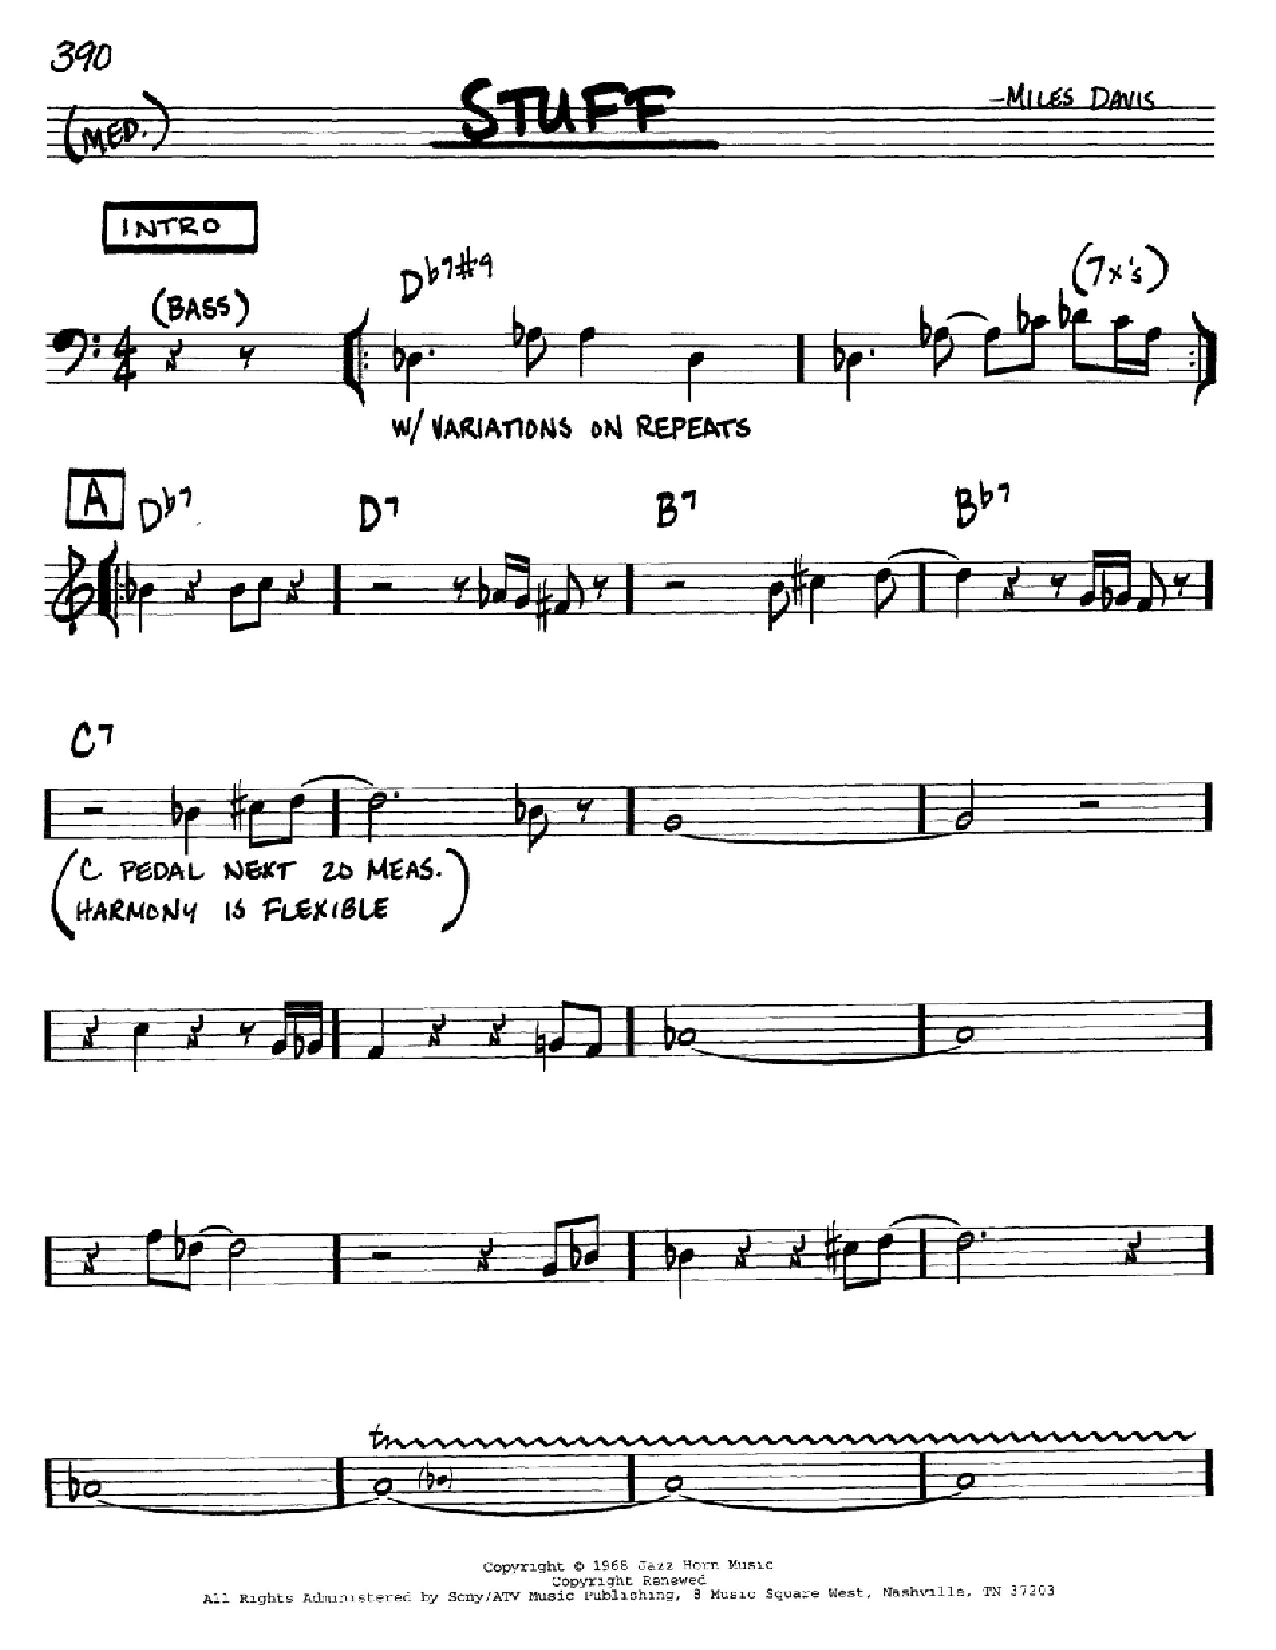 Miles Davis Stuff Sheet Music Notes & Chords for Trumpet Transcription - Download or Print PDF